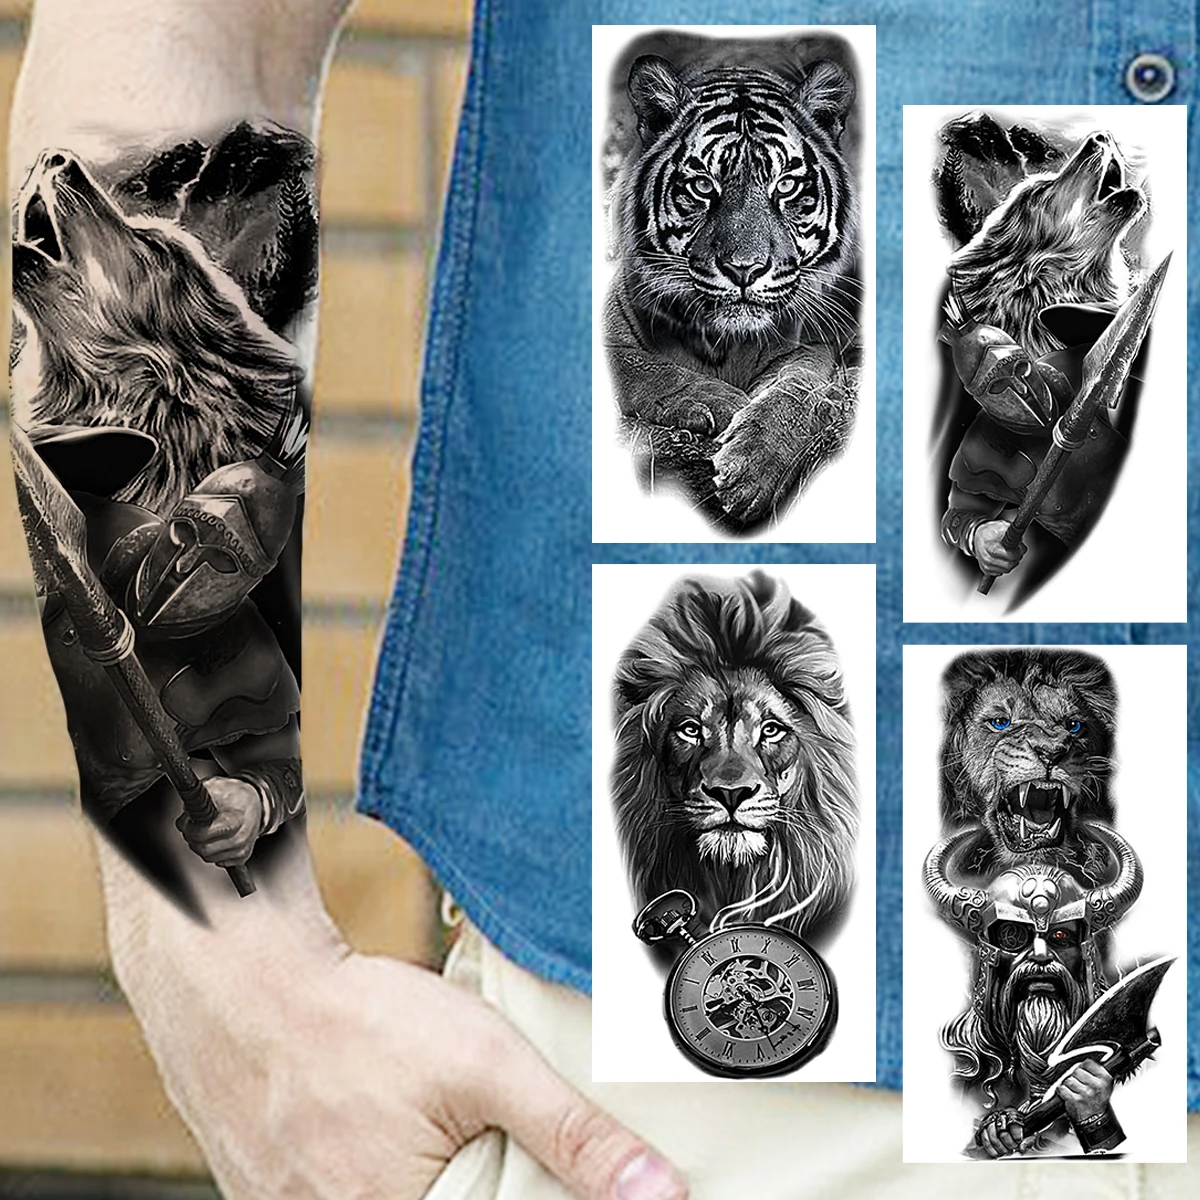 

Black Wolf Temporary Tattoos For Men Adults Women Realistic Tiger Lion Samurai Fake Tattoo Sticker Forearm Body Tatoos Body Art